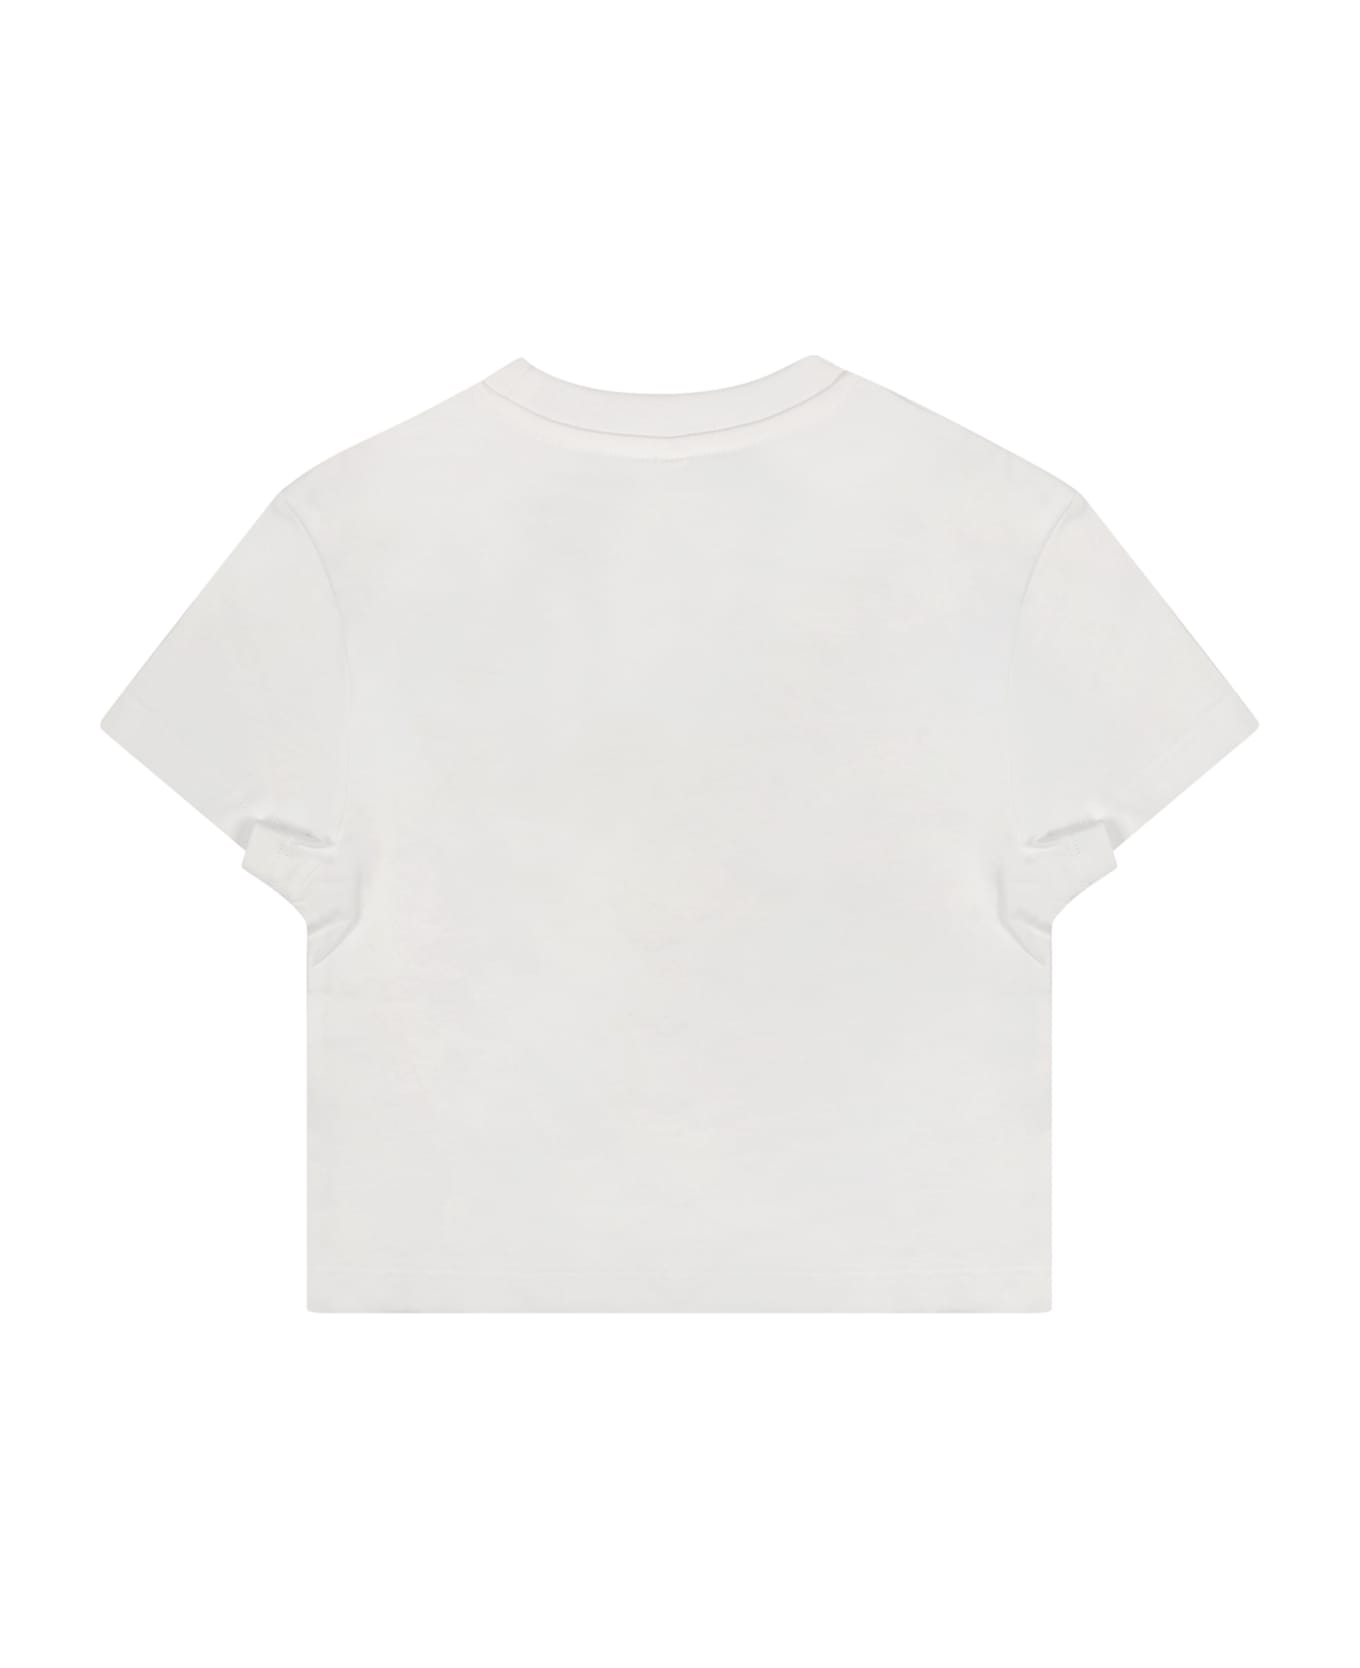 Stella McCartney Kids White T-shirt For Baby Boy With Toast Print - White